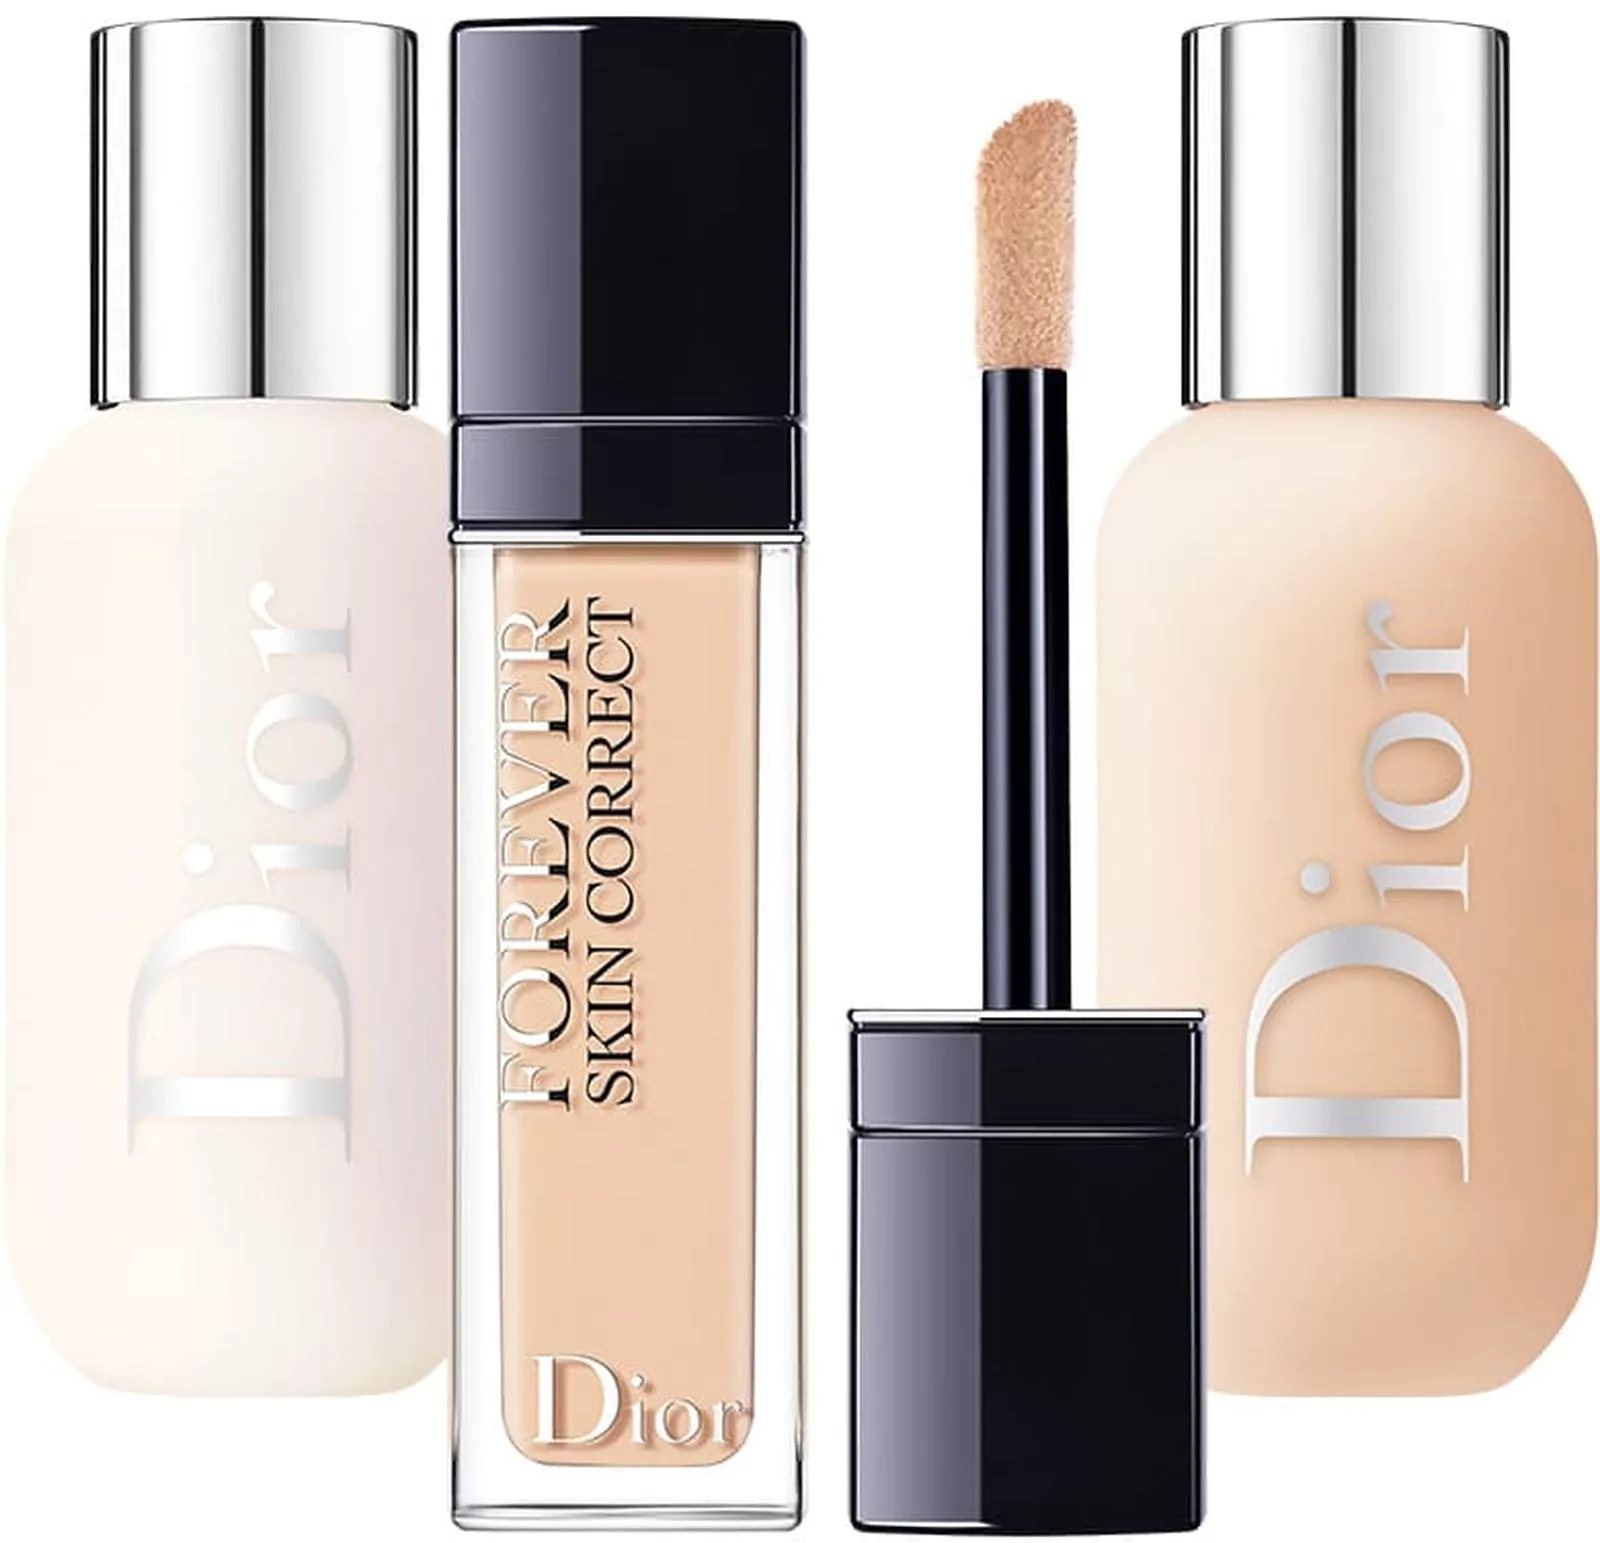 Dior Backstage Face And Body Primer, Dior Forever Skin Correct, Dior Backstage Face And Body foundation